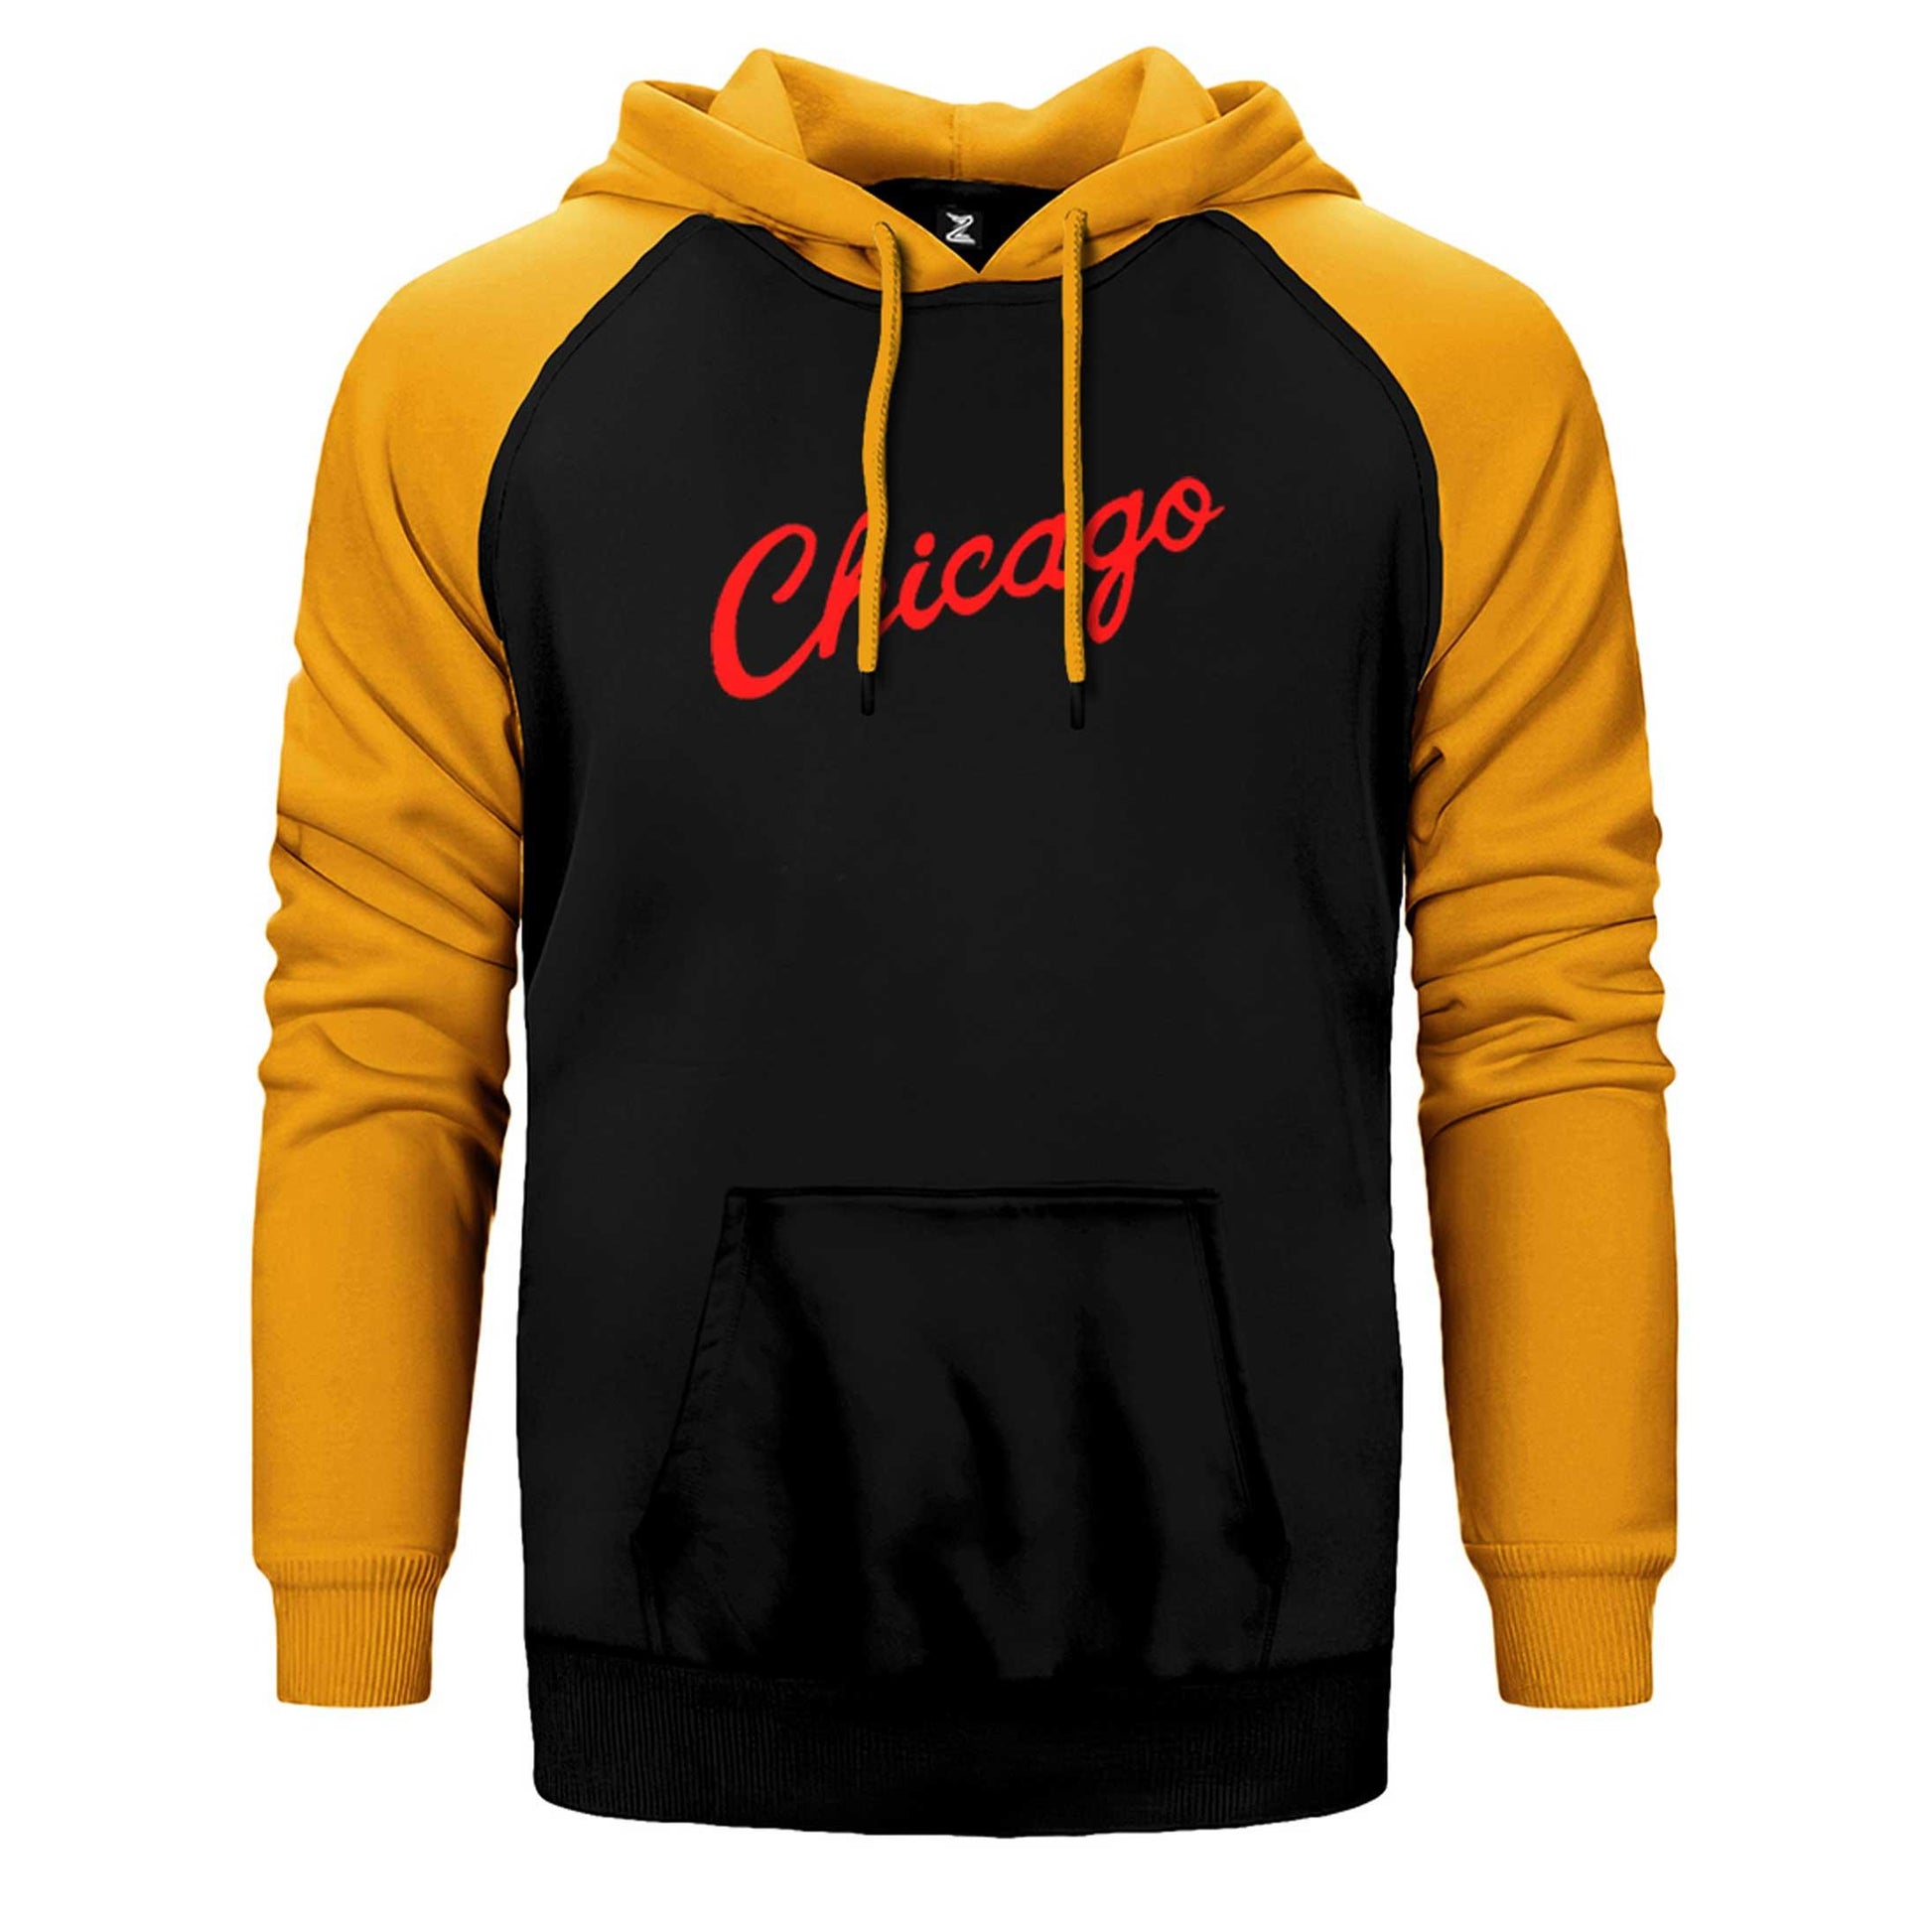 Chicago Yazı Çift Renk Reglan Kol Sweatshirt / Hoodie - Zepplingiyim